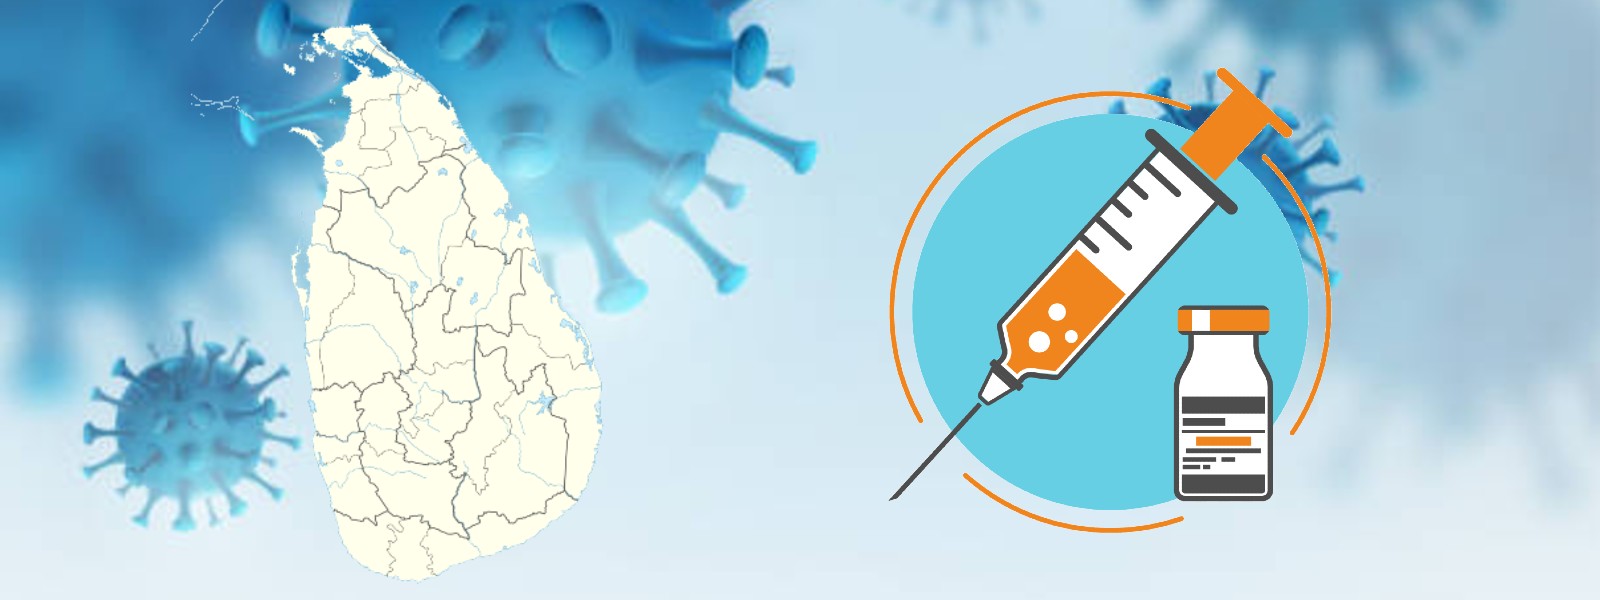 Sri Lanka’s vaccination progress mapped – Authorities release district breakdown